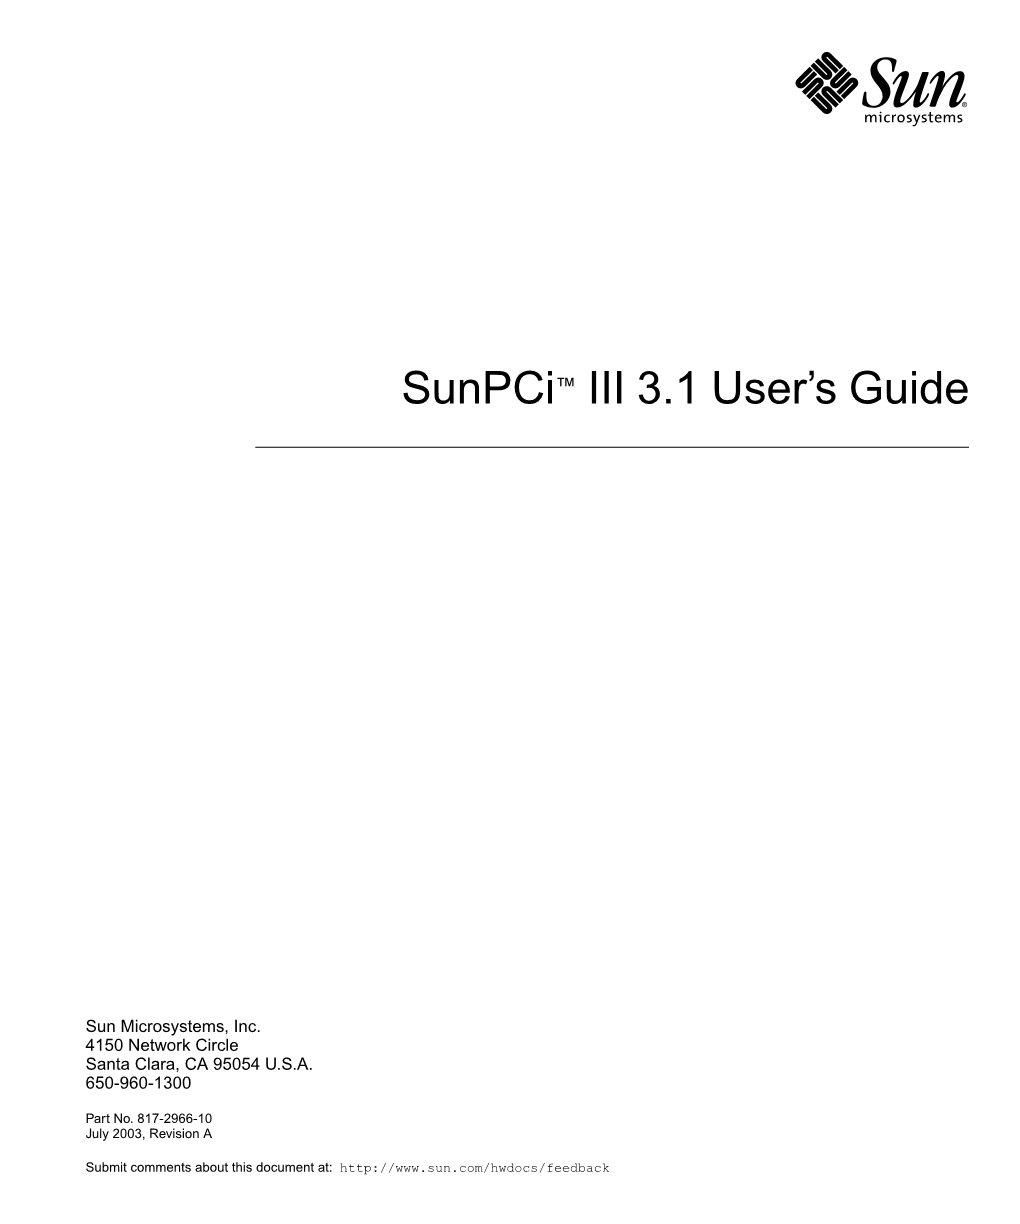 Sunpci III 3.1 User's Guide